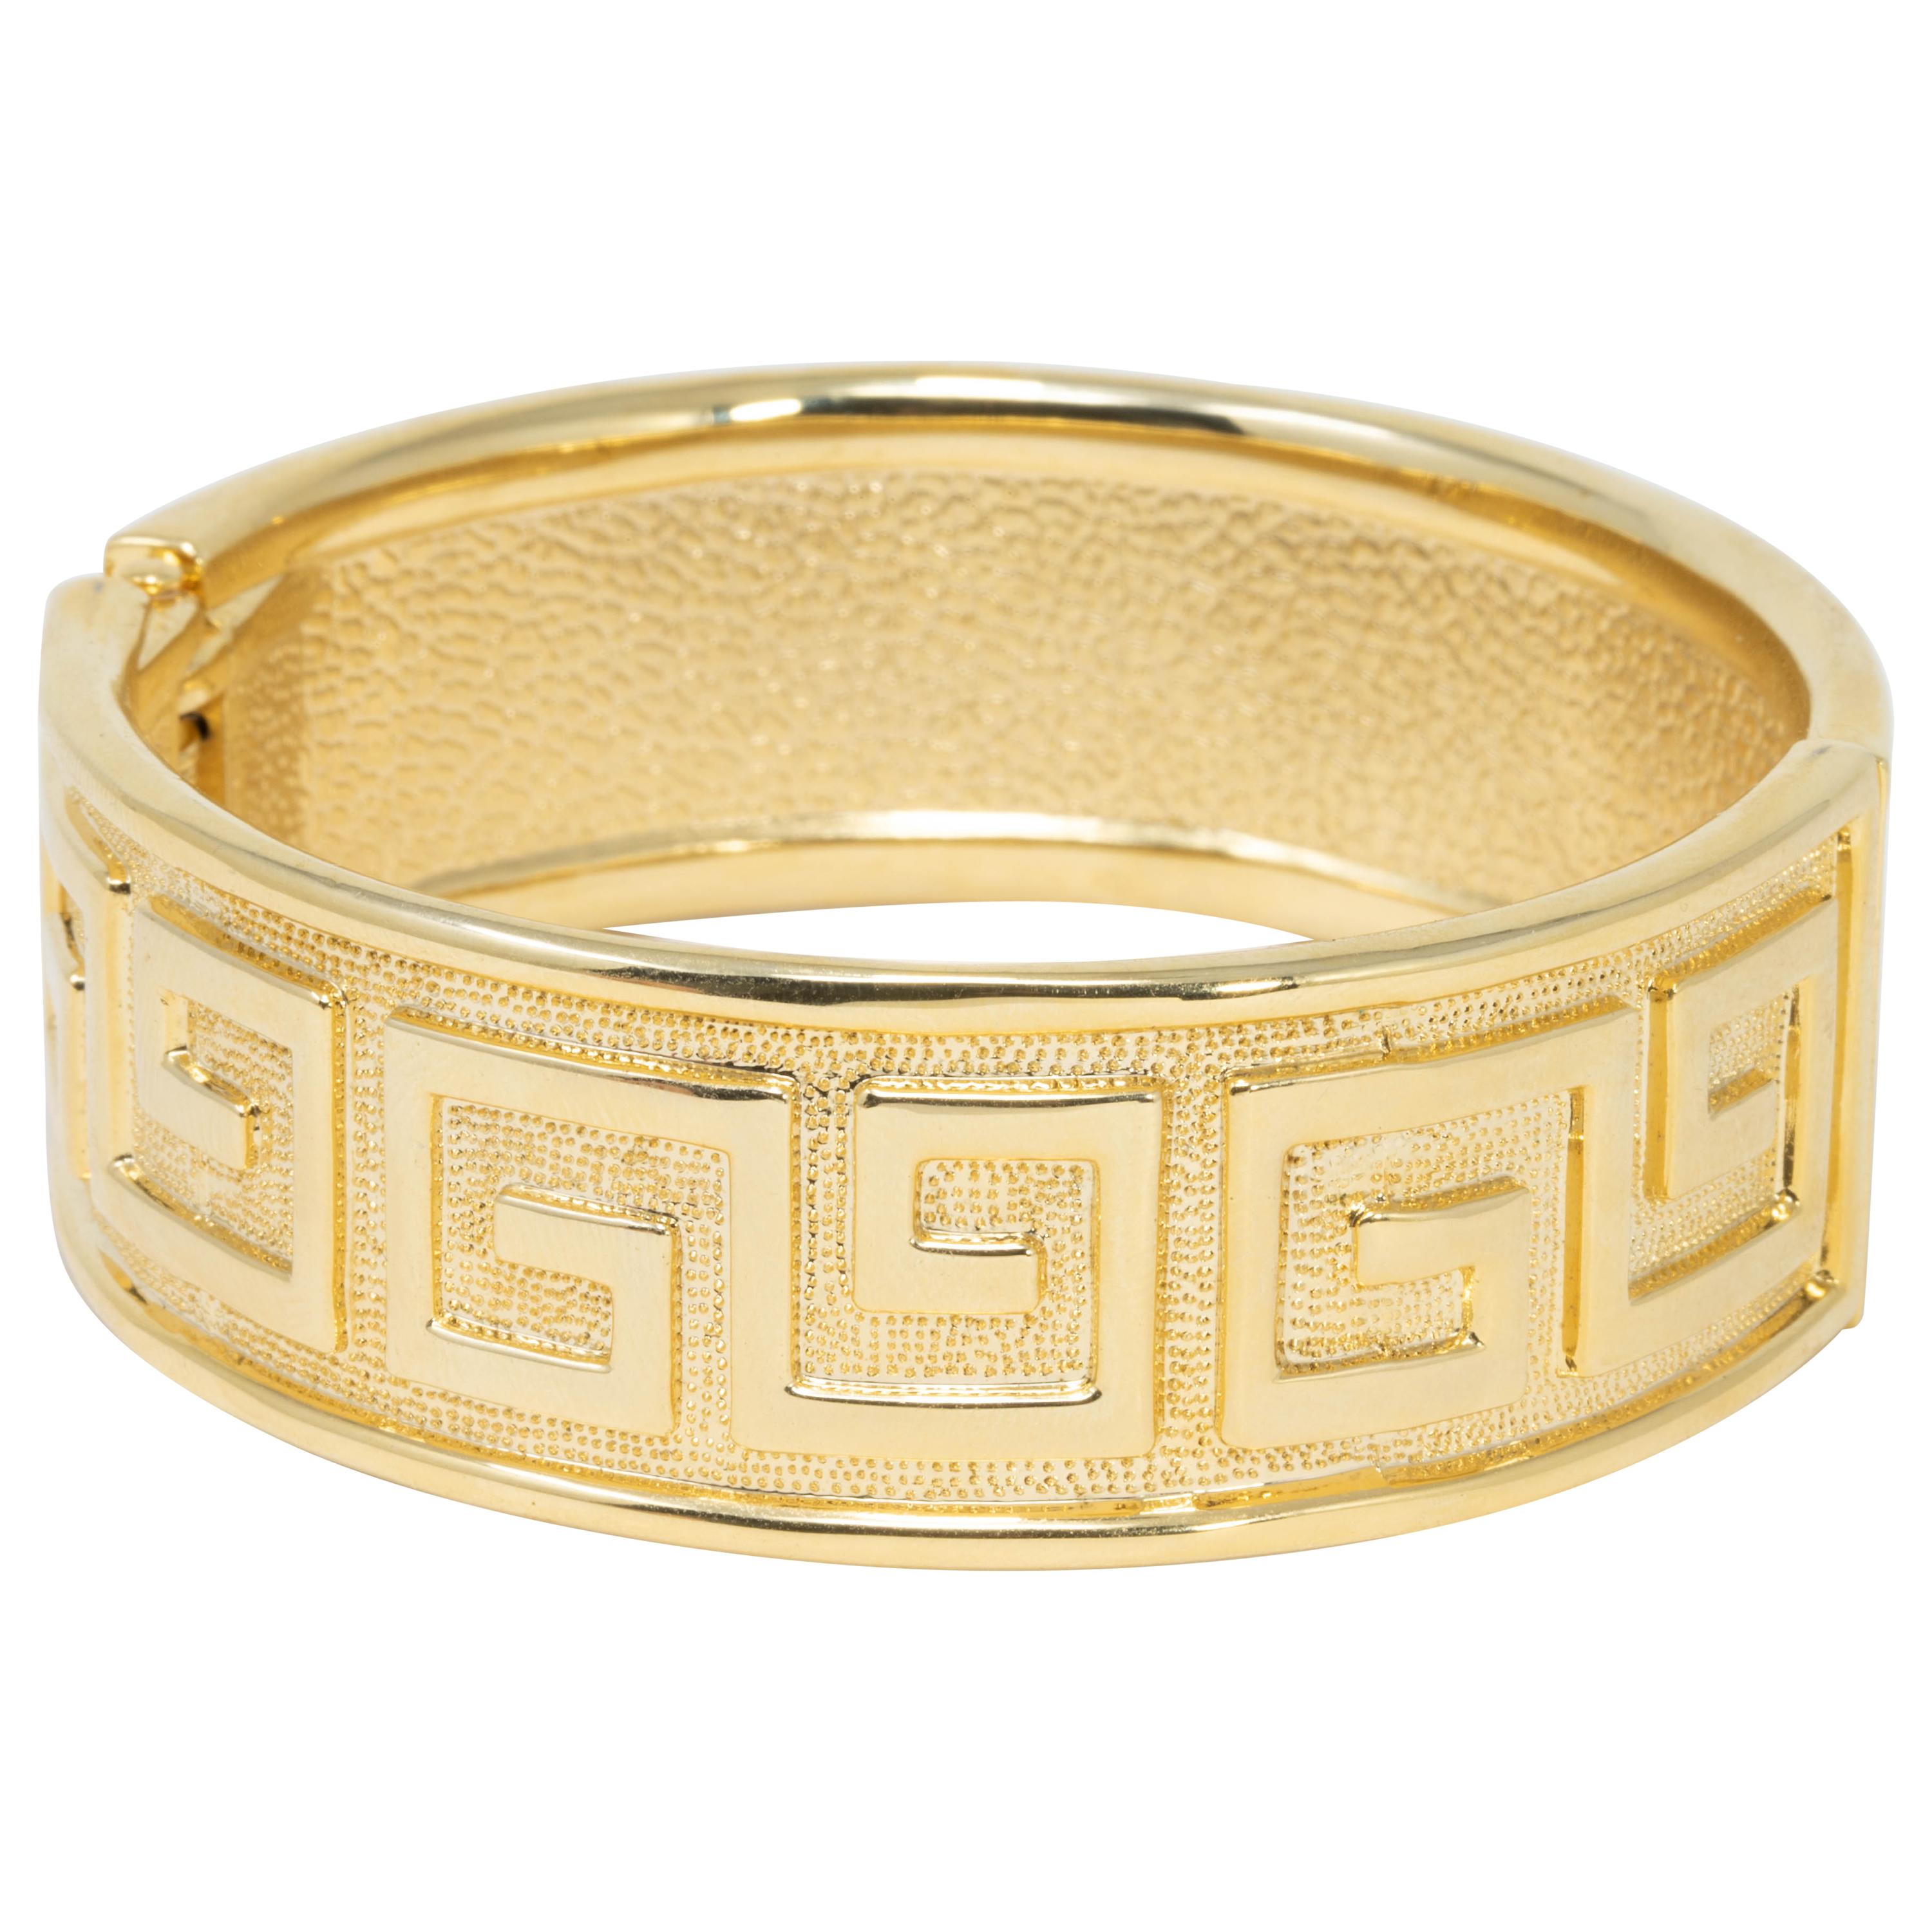 Retro Raised G Motif Textured Gold Bangle Bracelet